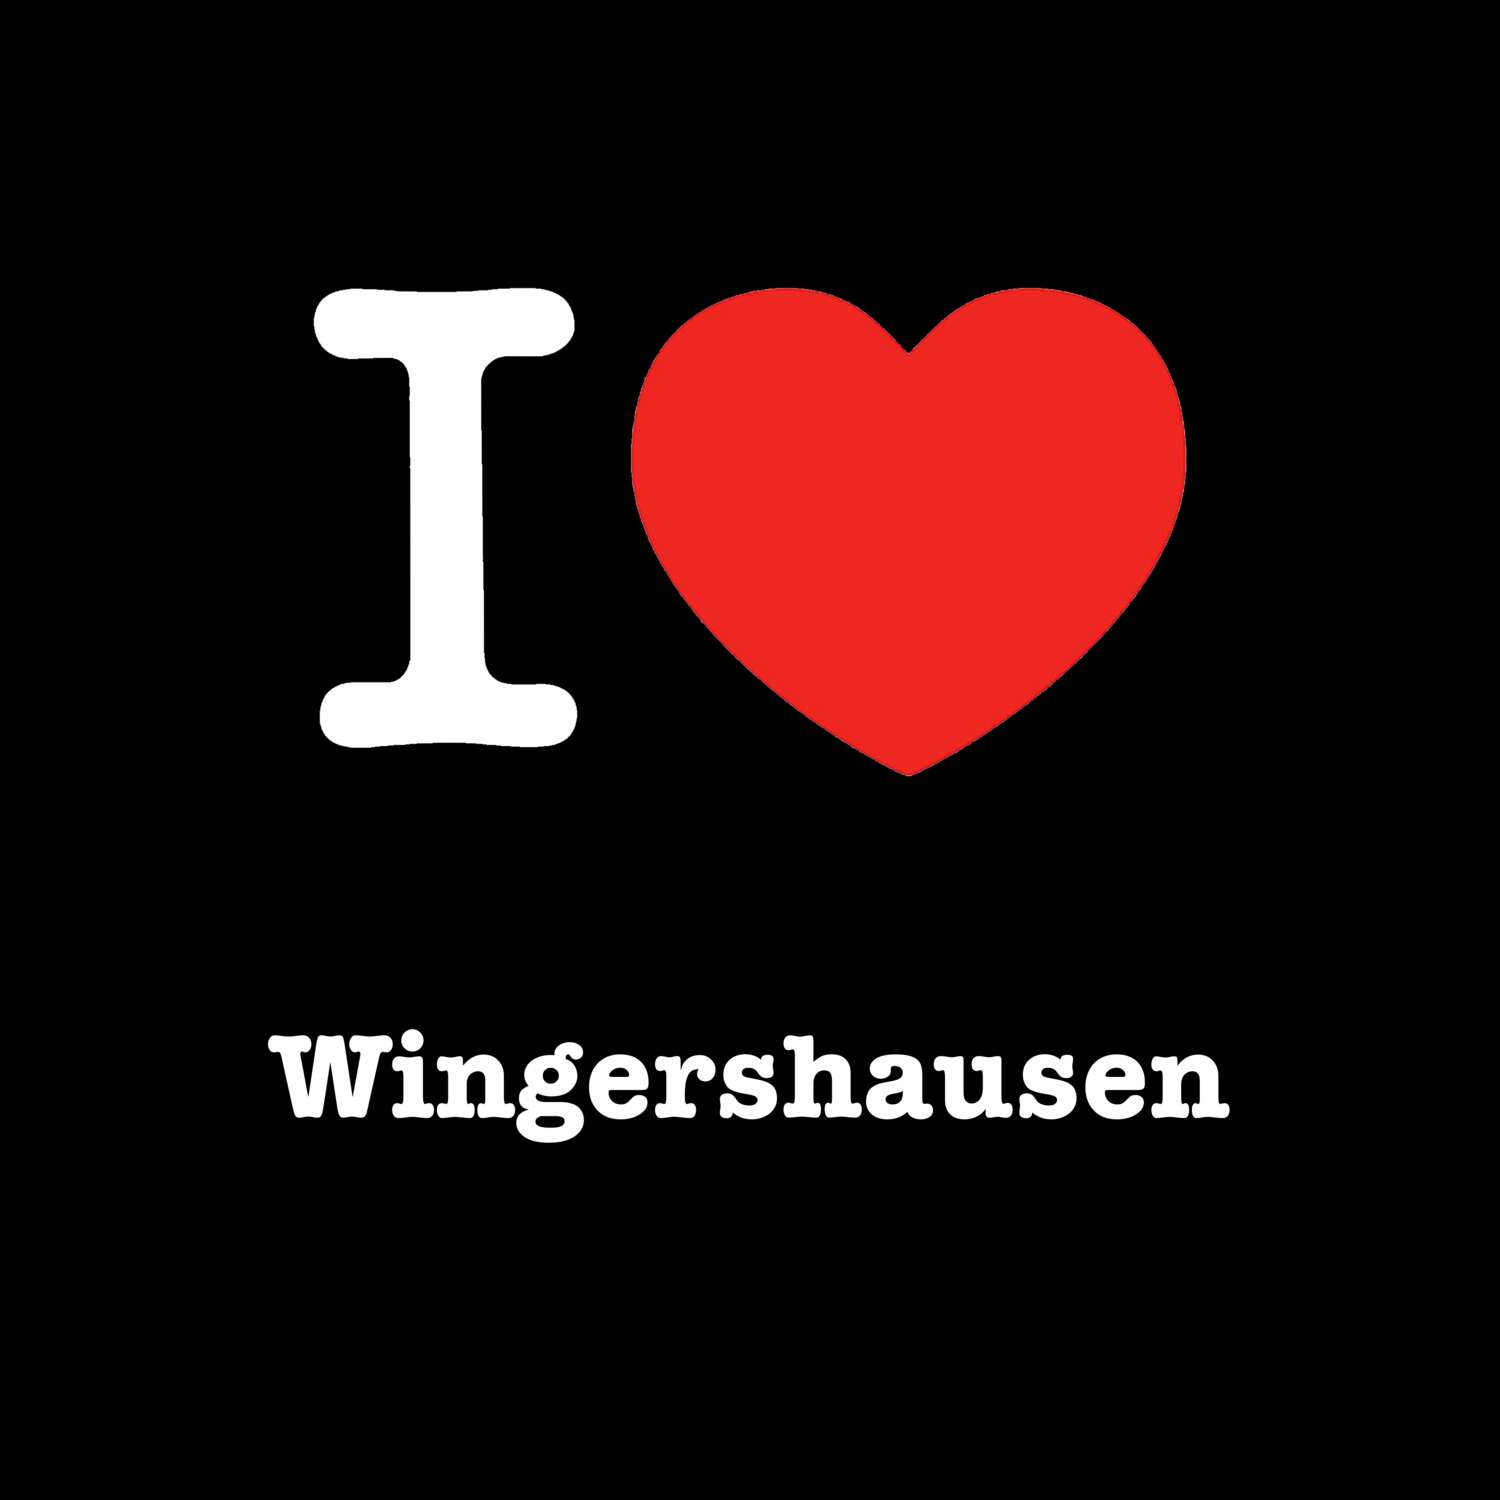 Wingershausen T-Shirt »I love«